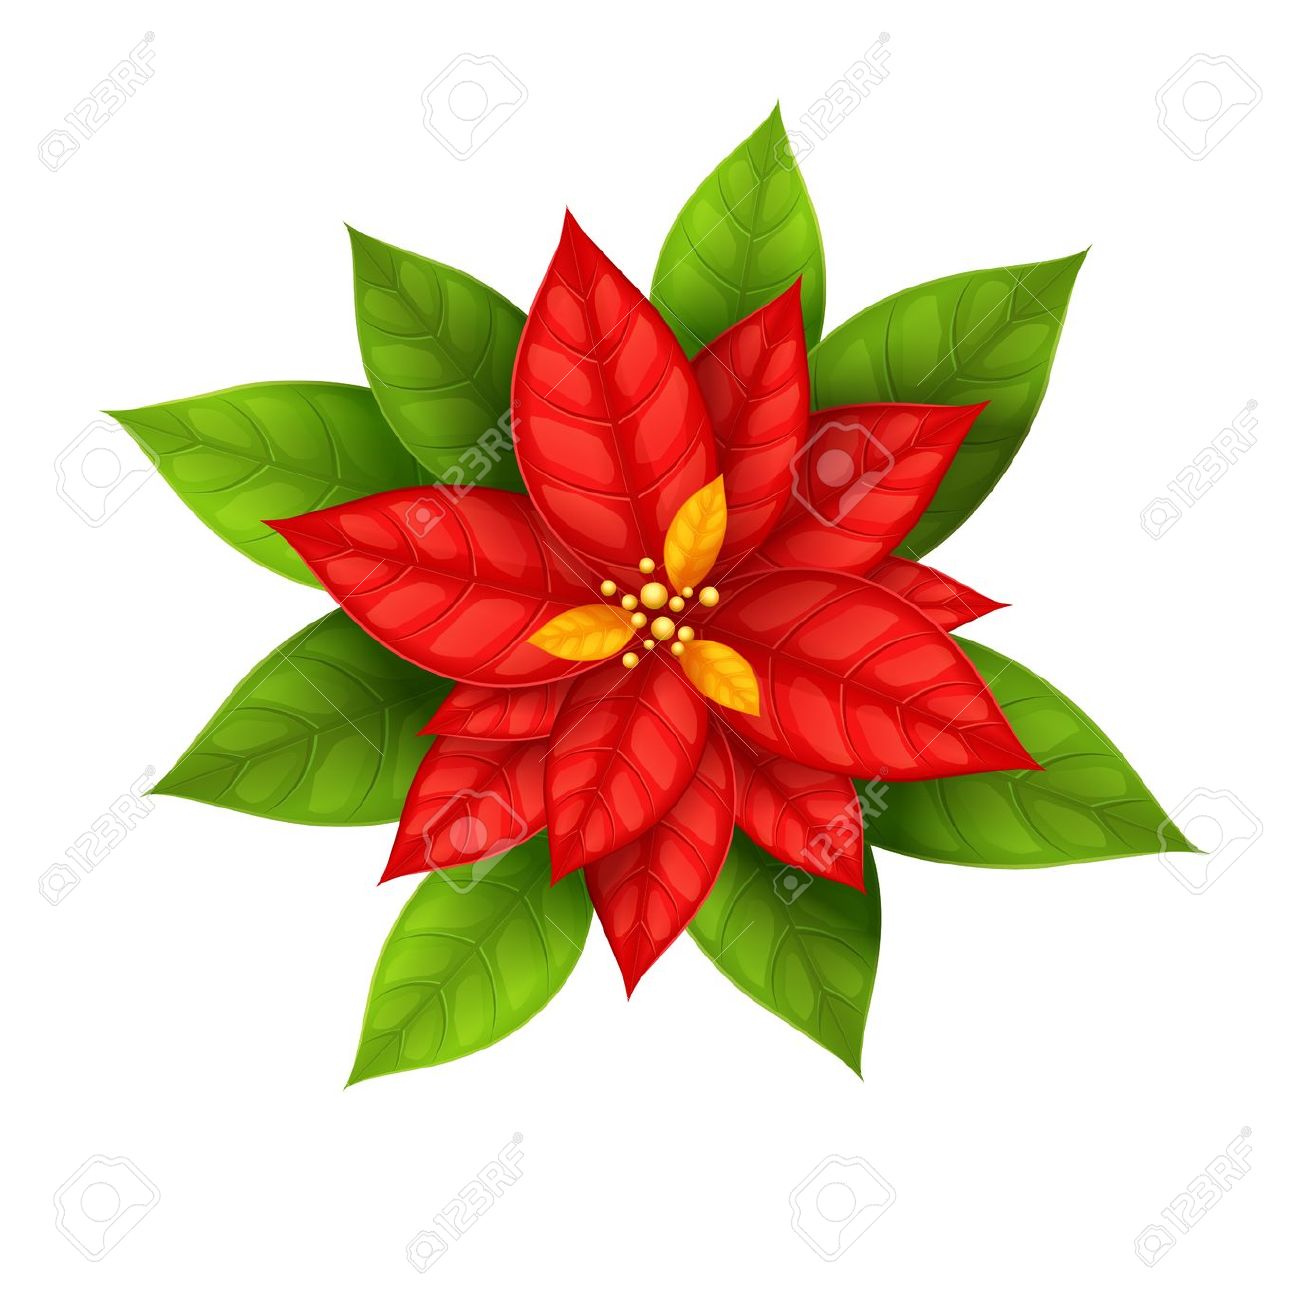 poinsettia: Red Christmas Star flower poinsettia isolated on white background - eps10 vector illustration